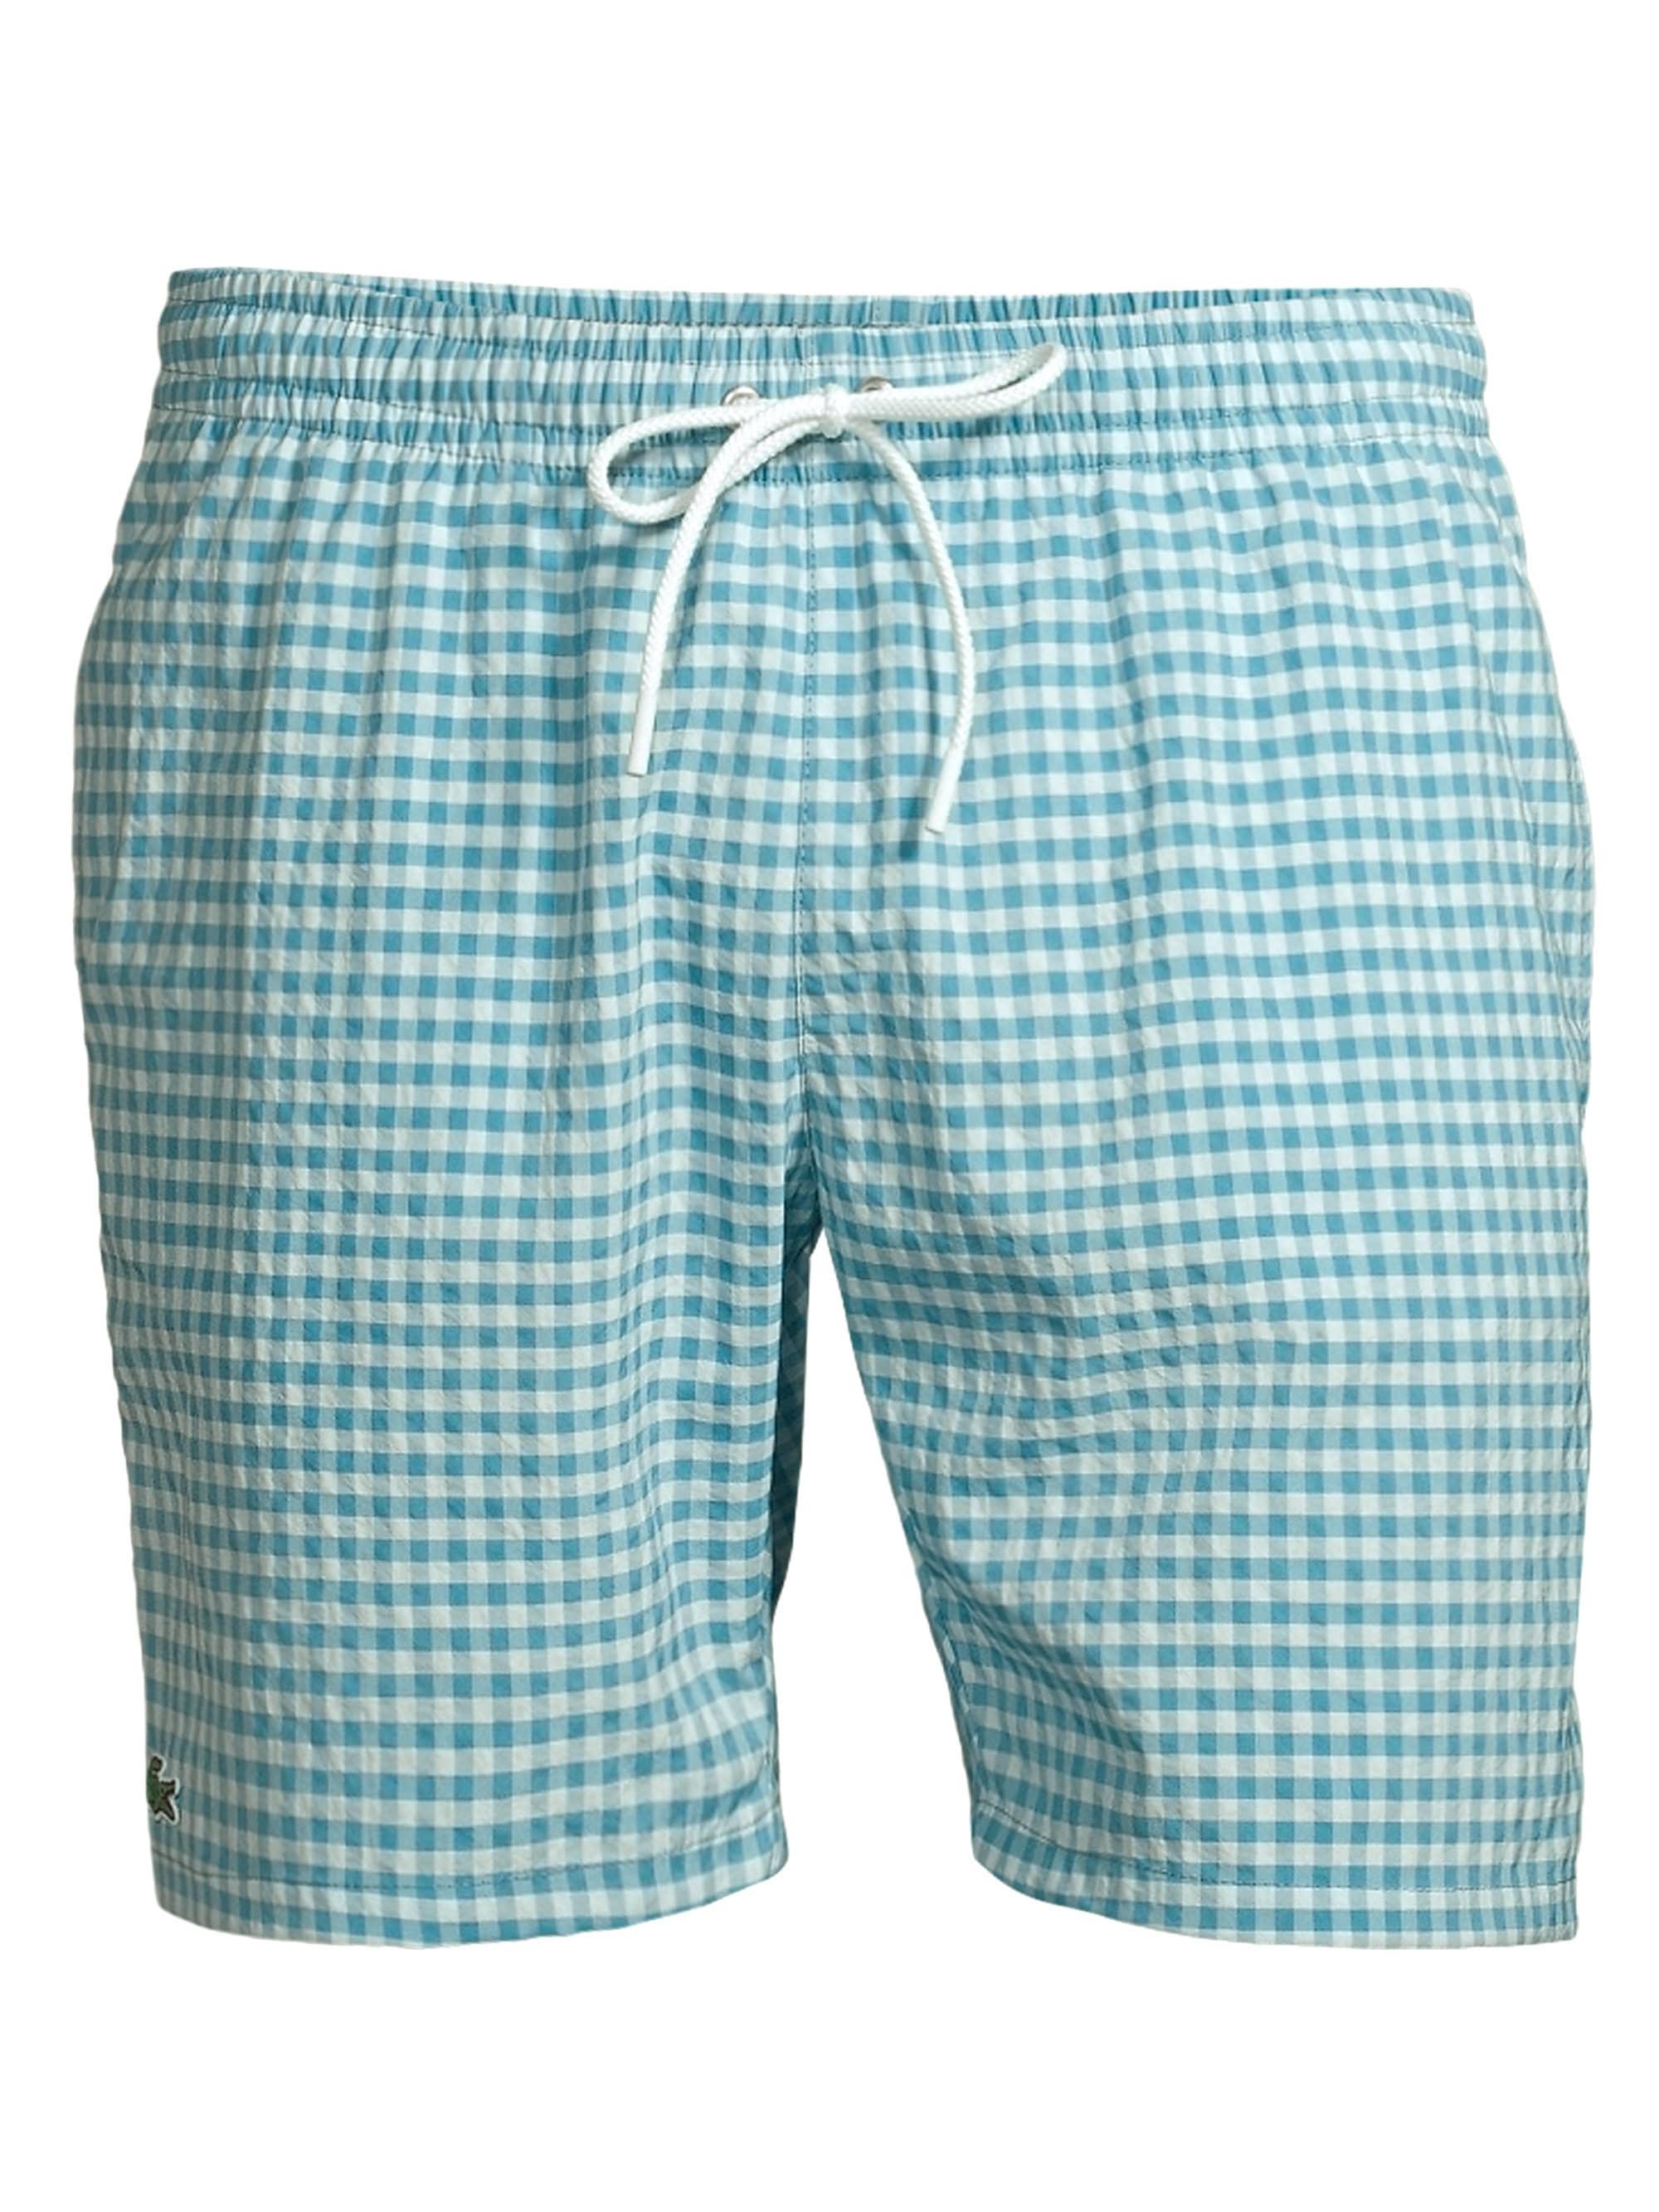 Lyst - Lacoste Men's Gingham Seersucker Mid-length Swim Shorts - Green ...